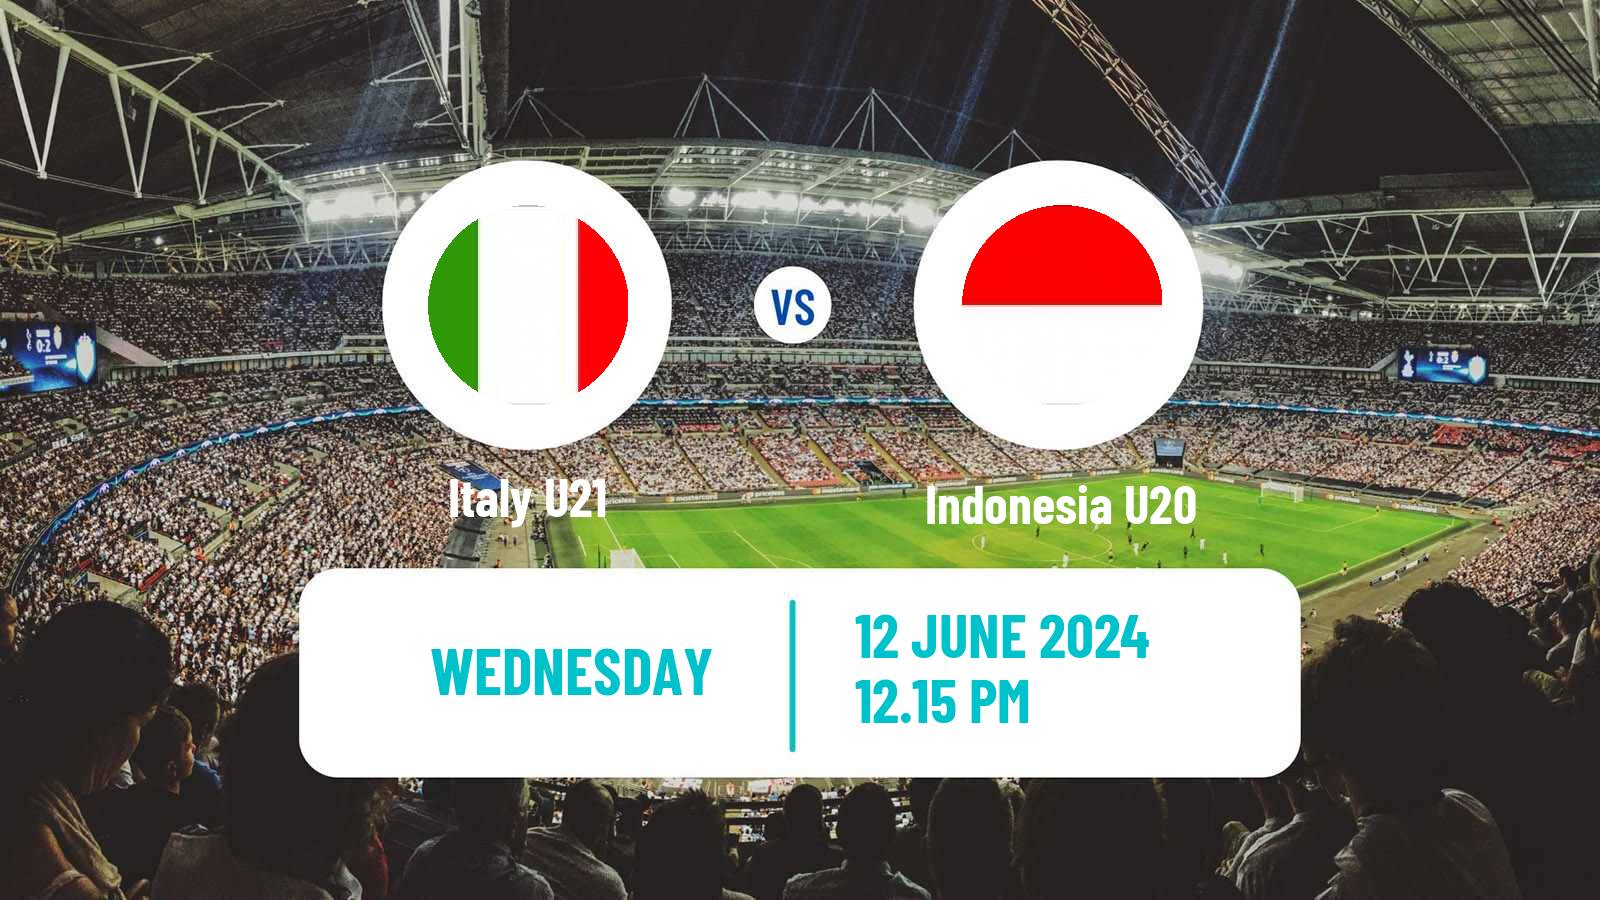 Soccer Maurice Revello Tournament Italy U21 - Indonesia U20